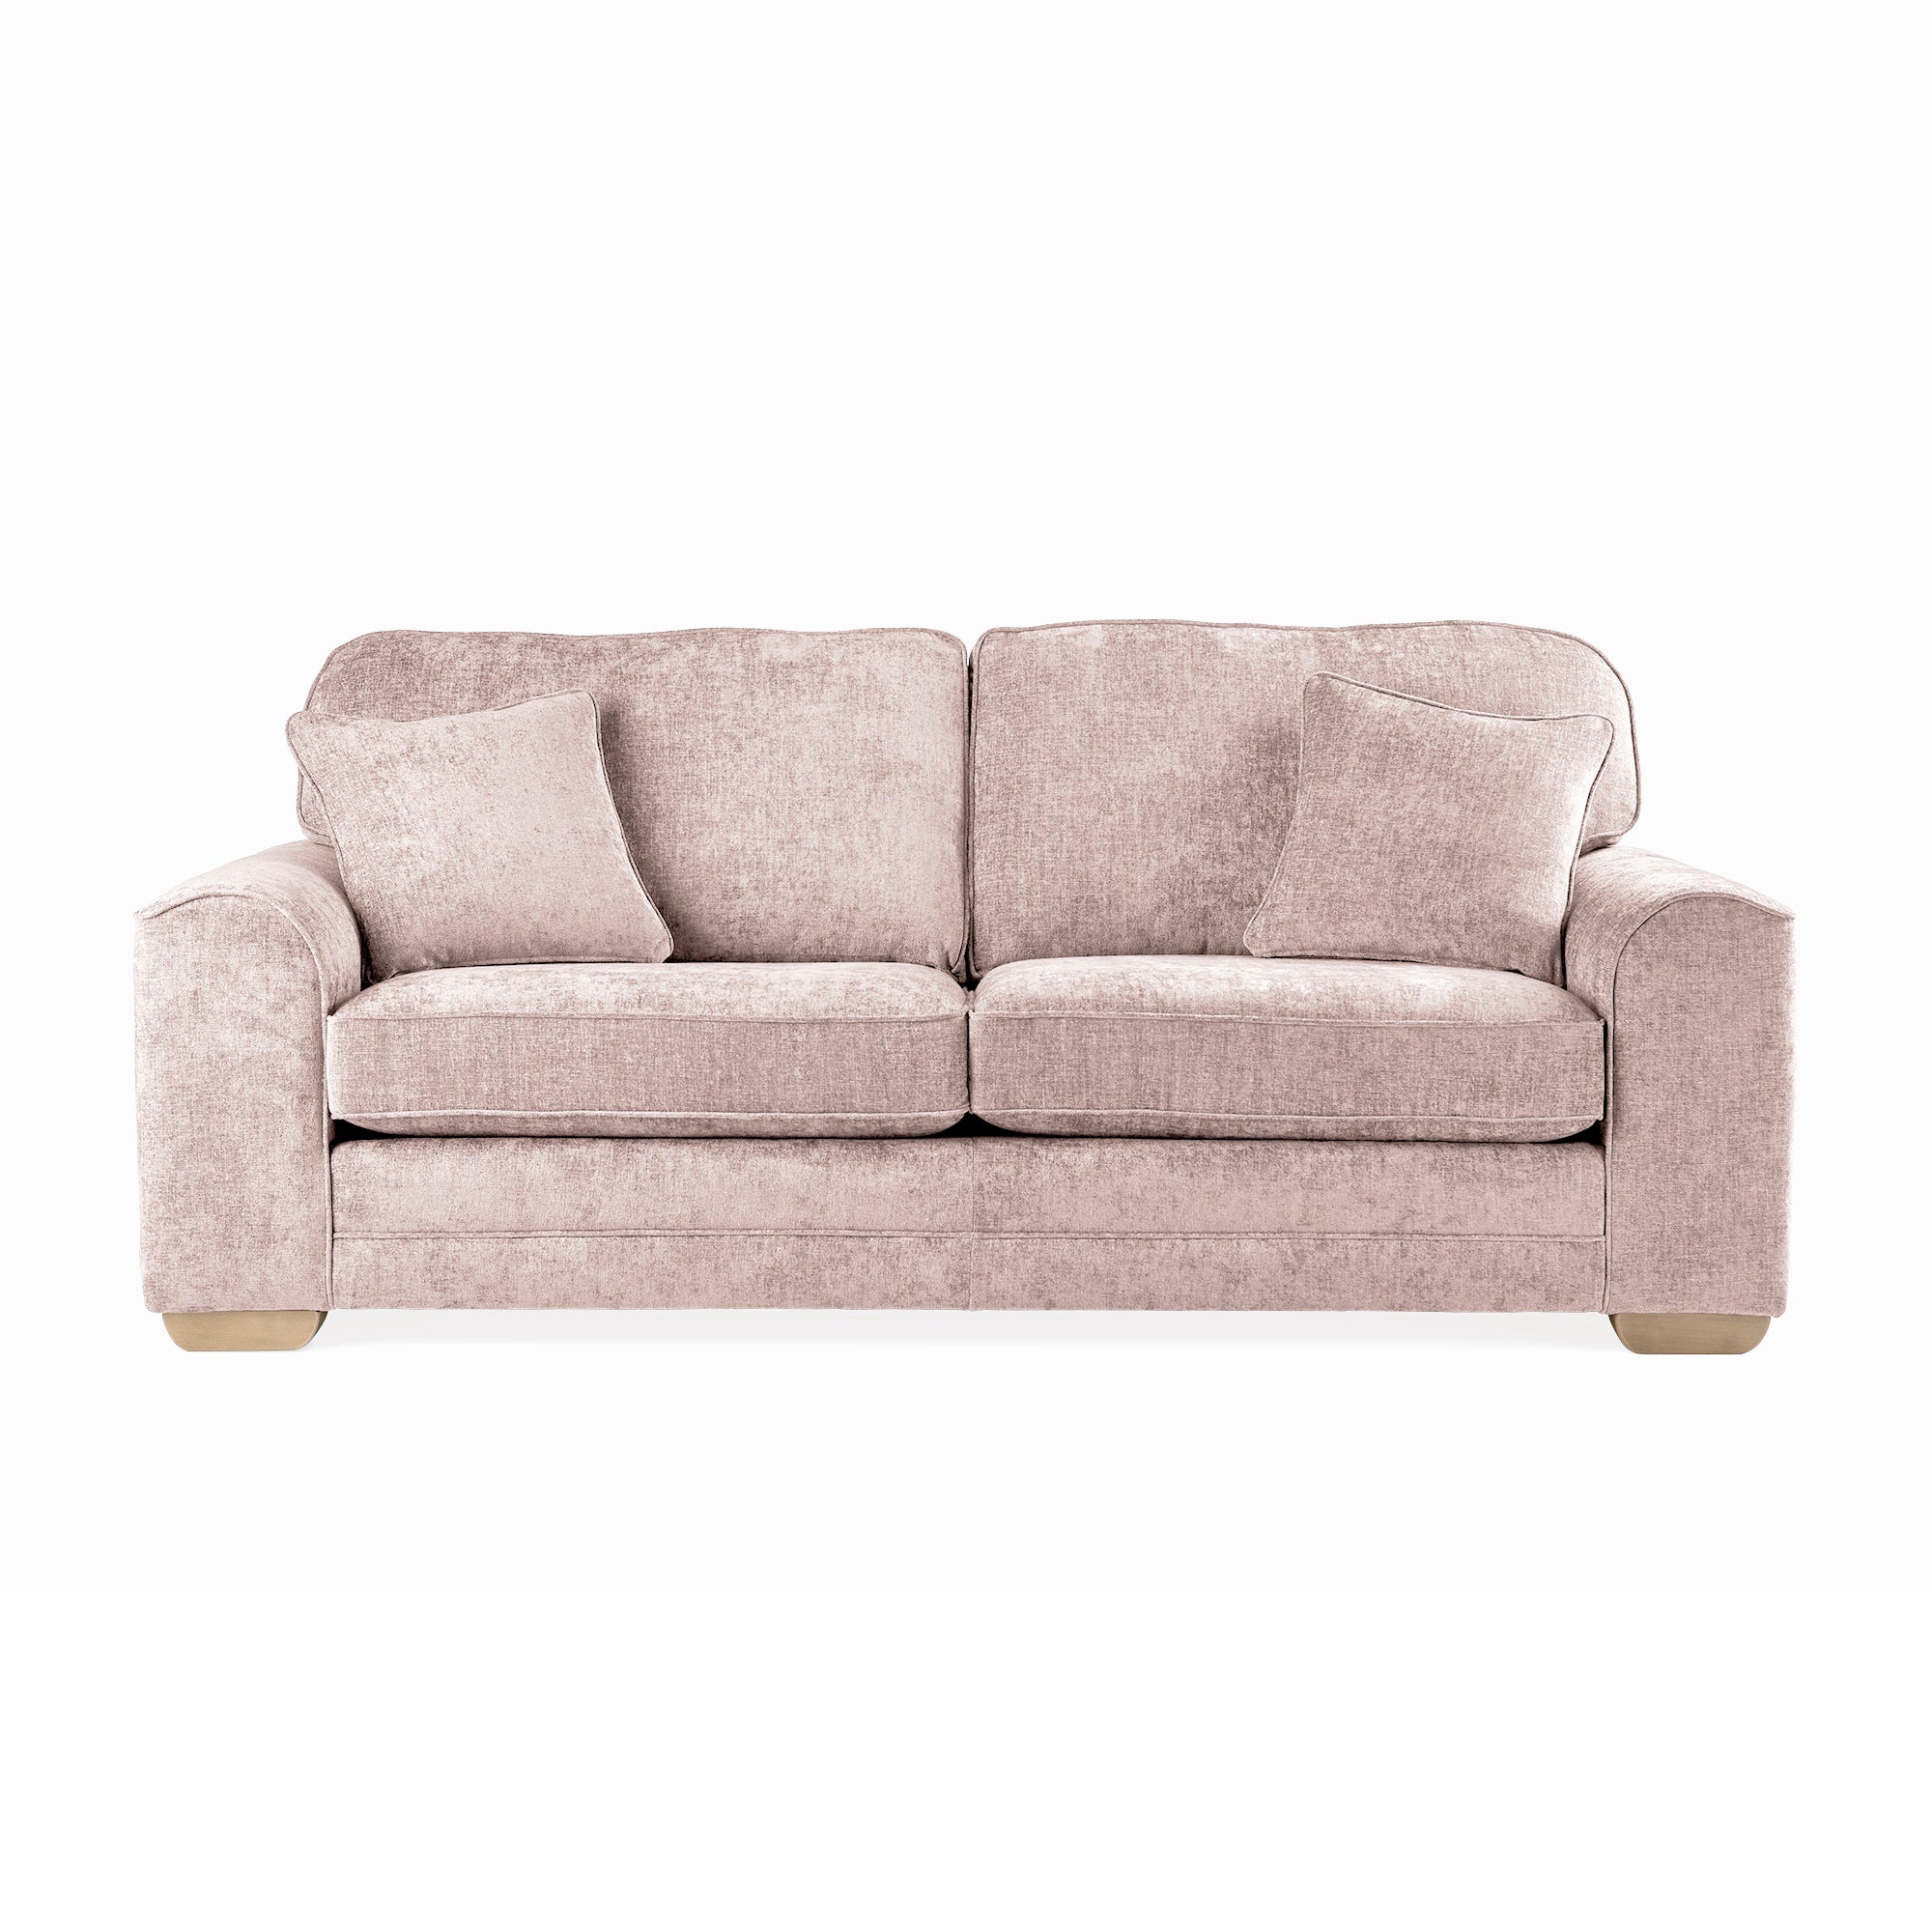 Morello 3 Seater Sofa Rose